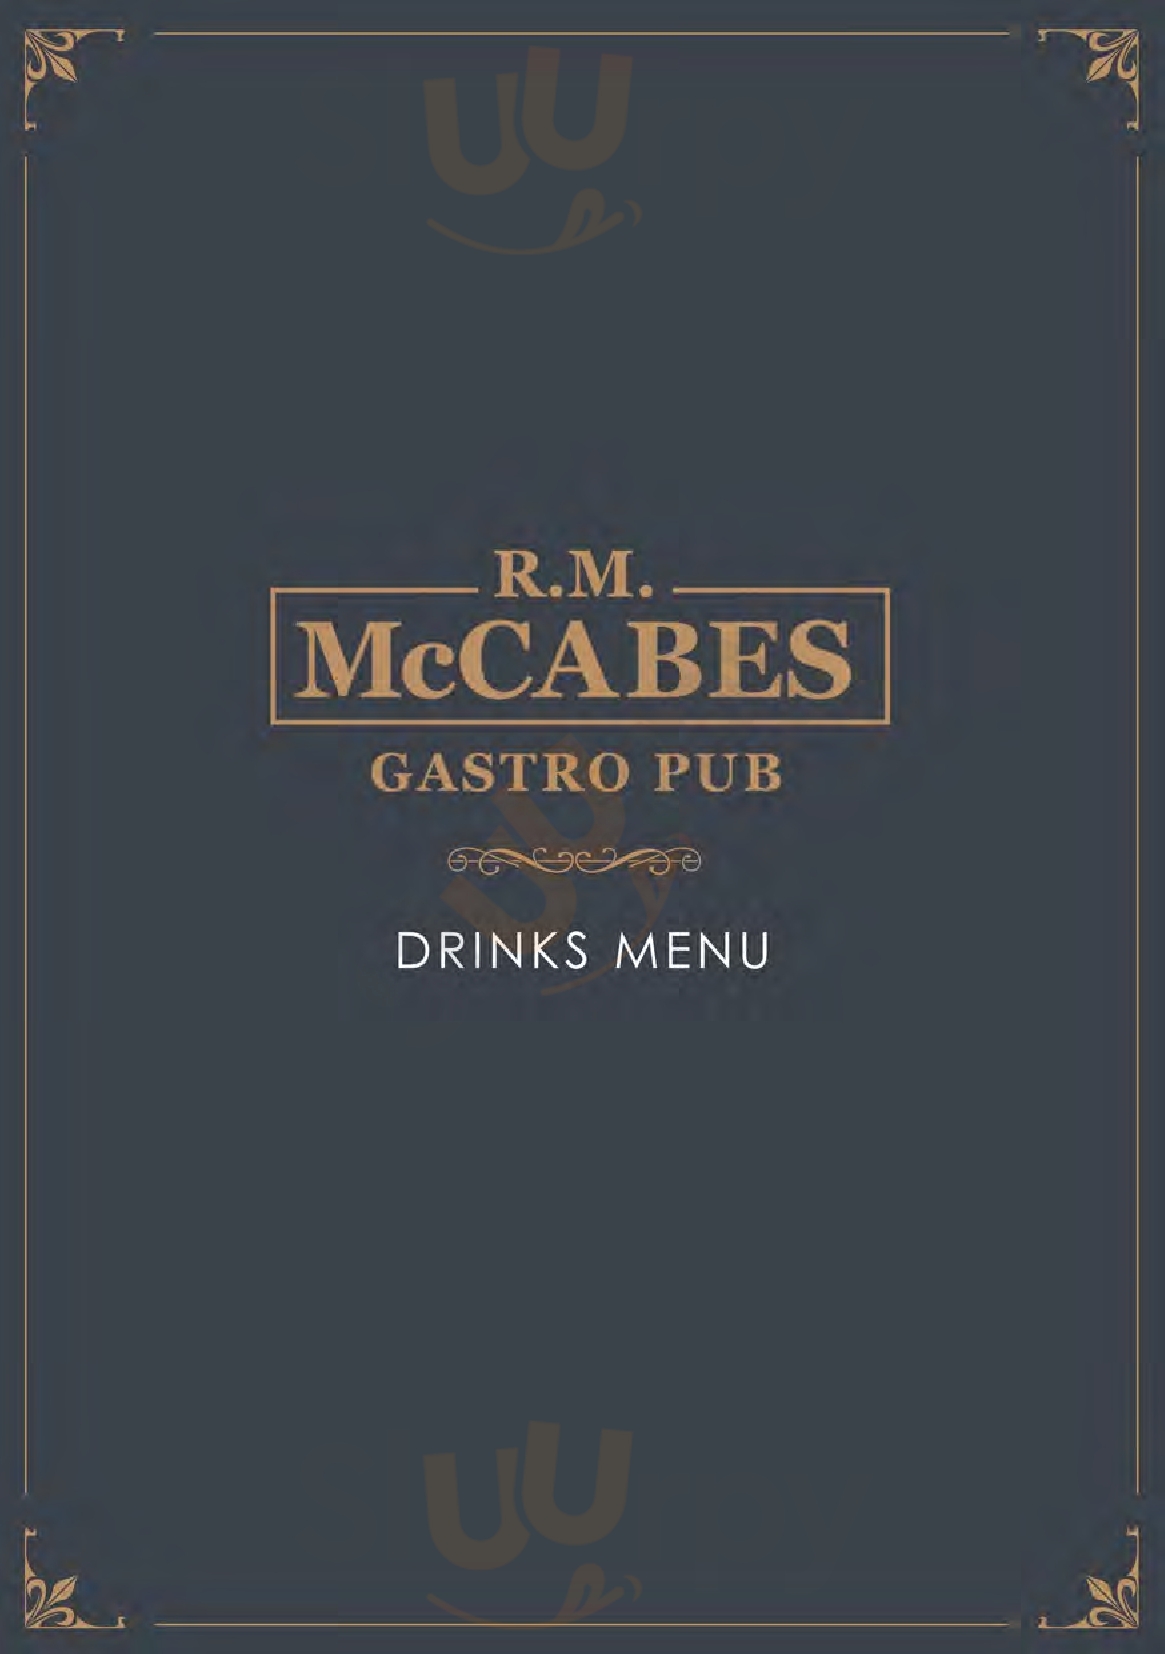 R.m. Mccabes Gastro Bar Galway Menu - 1